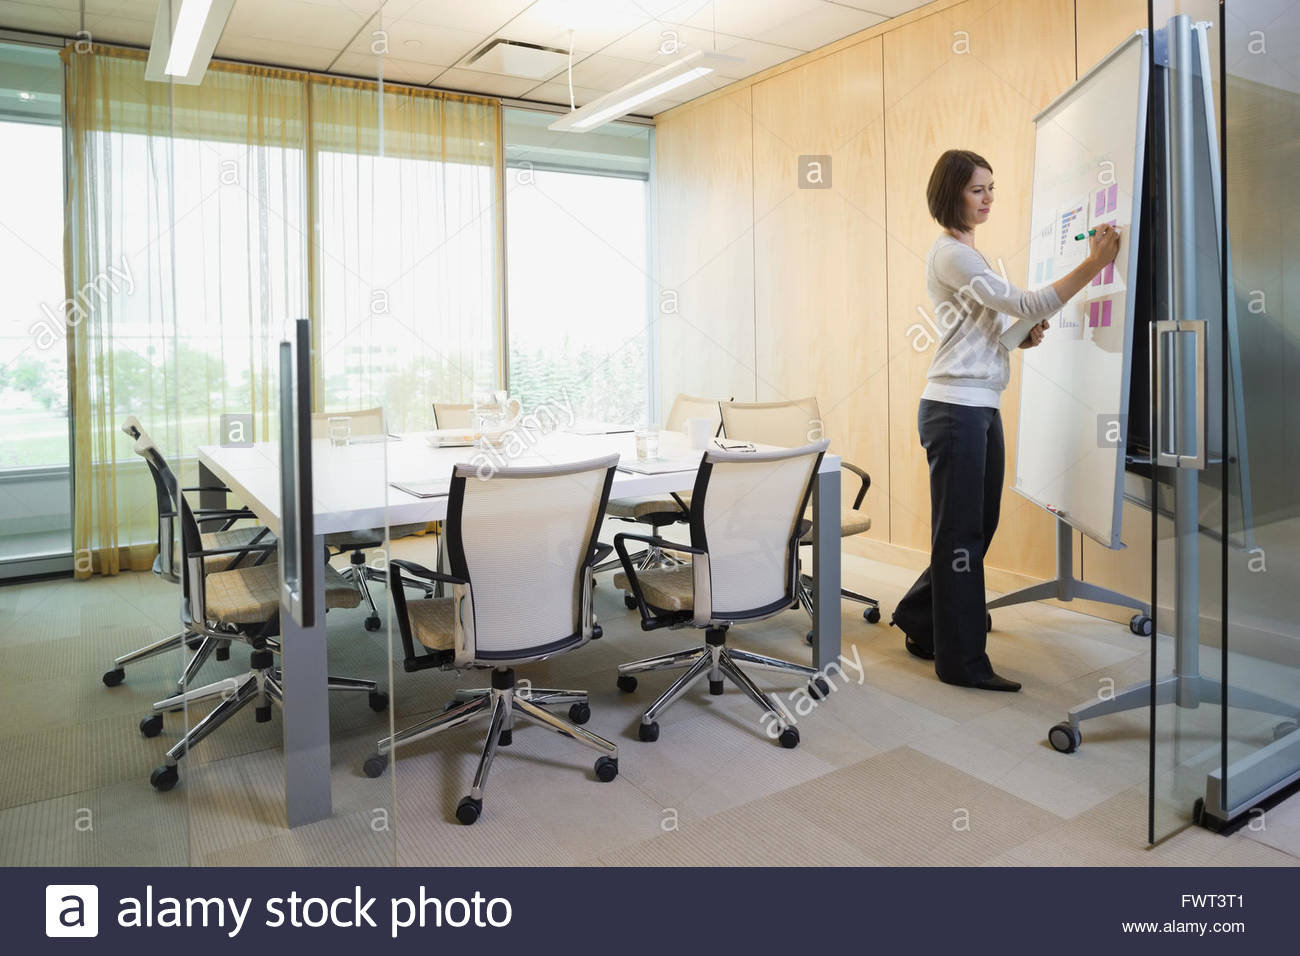 Businesswoman writing on flipchart in board room Stock Photo